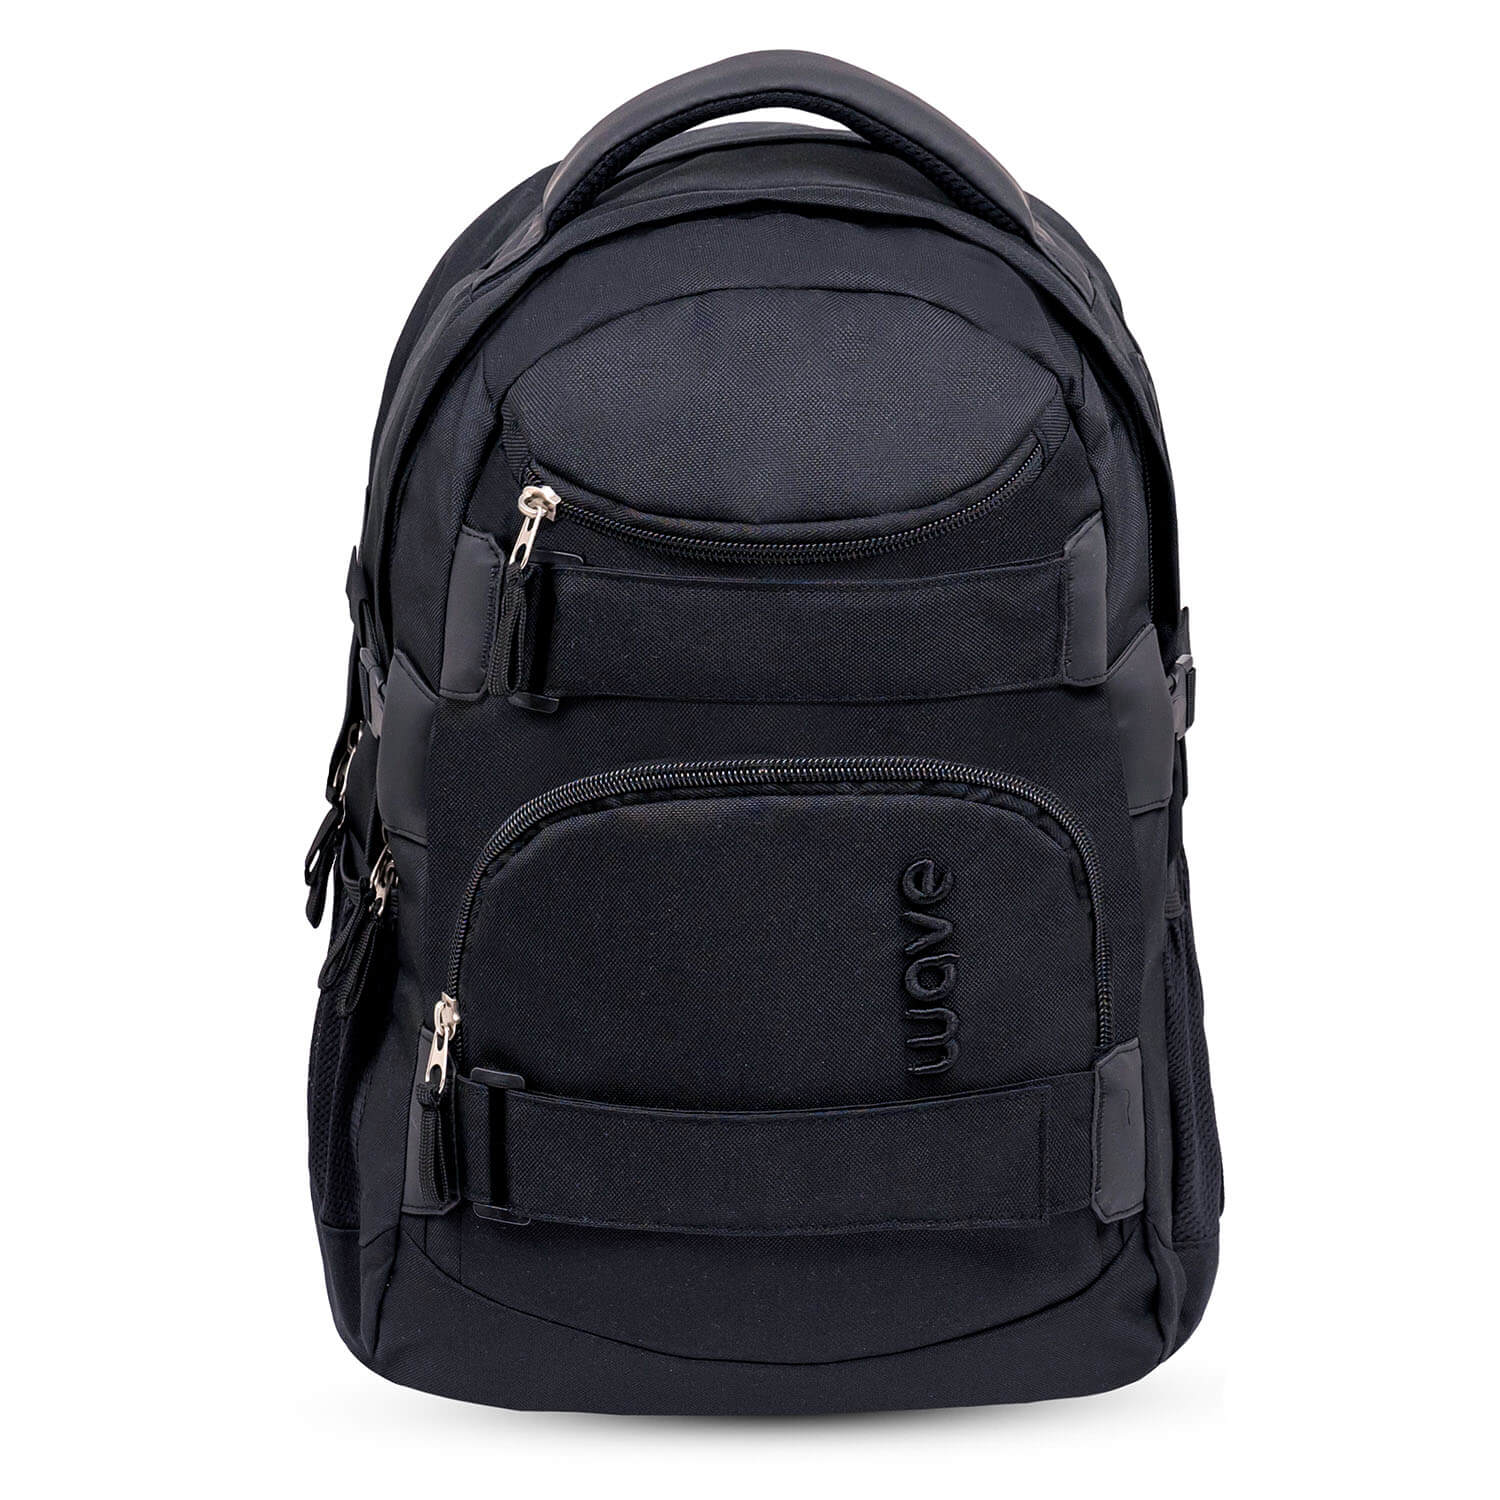 Wave Infinity Posh Black school backpack